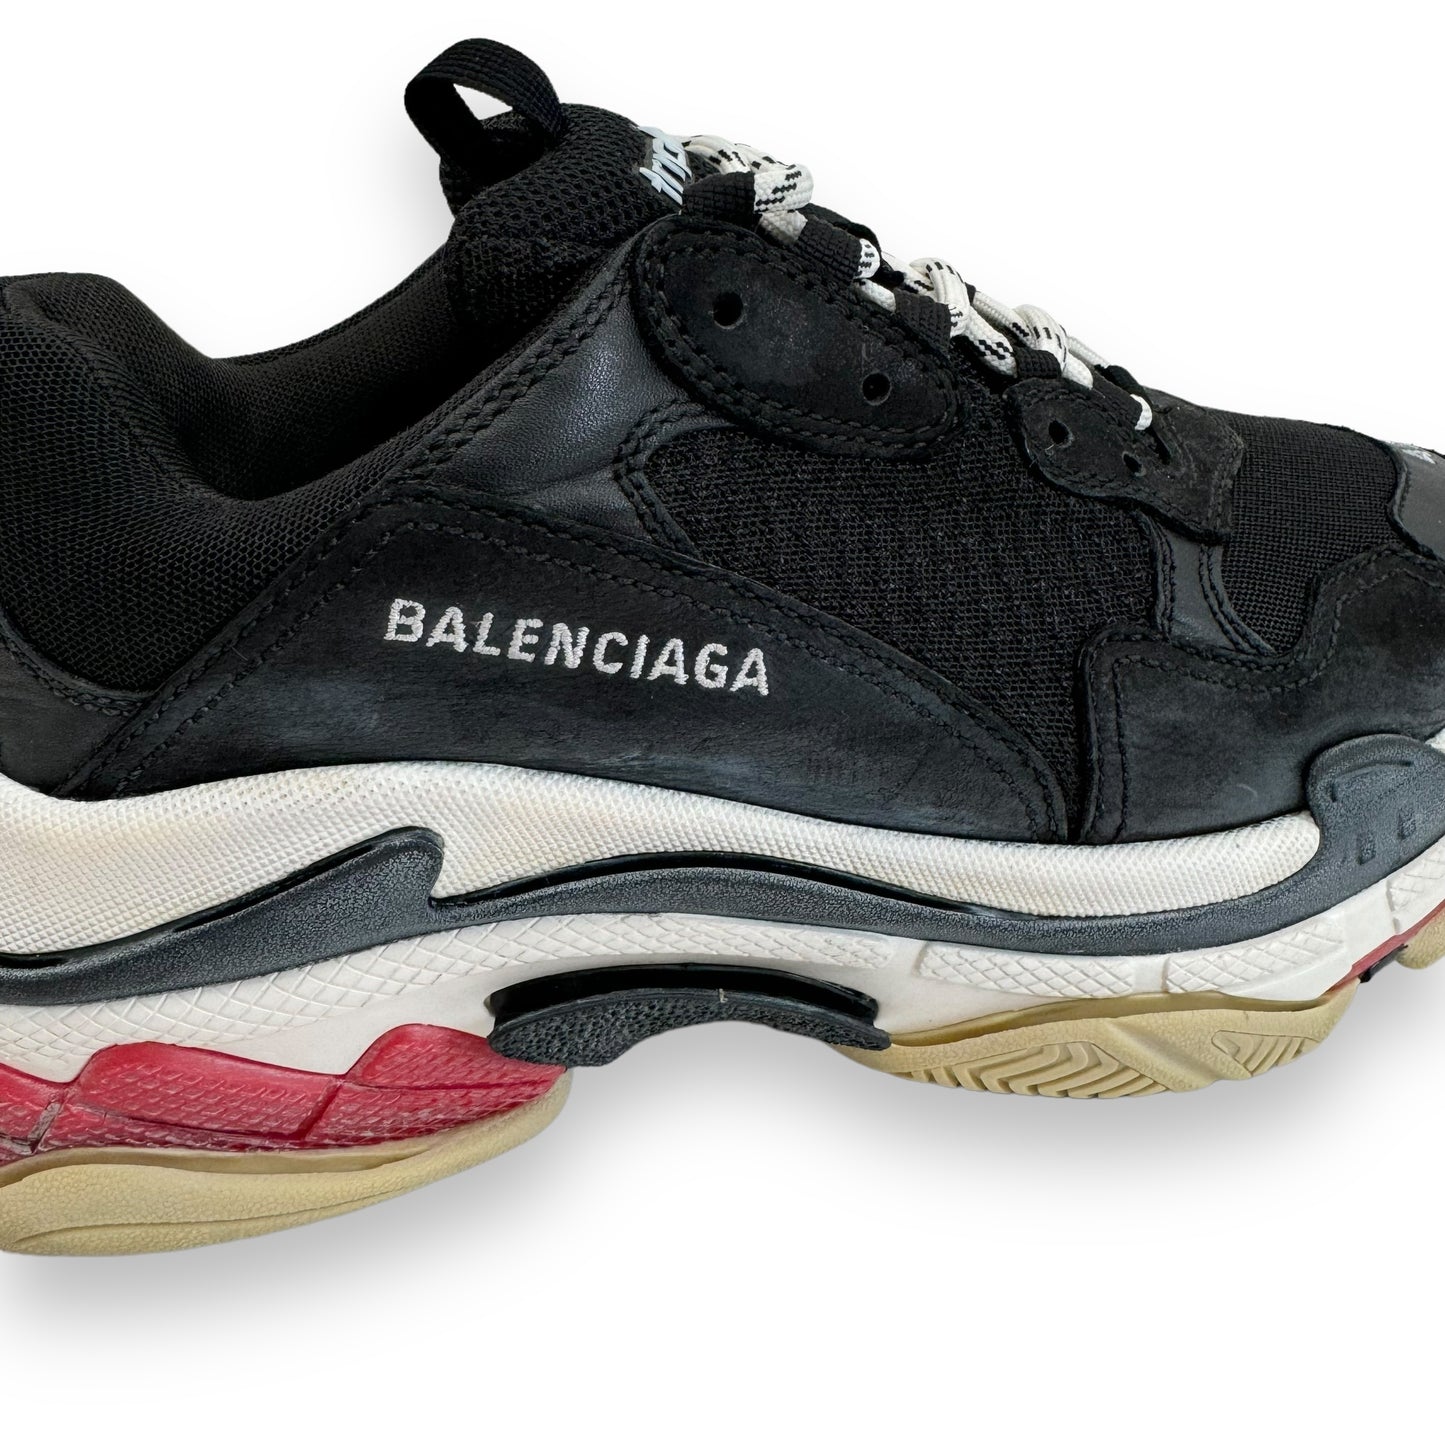 BALENCIAGA TRIPLE S DISTRESSED SNEAKER BLACK / WHITE / RED UK8